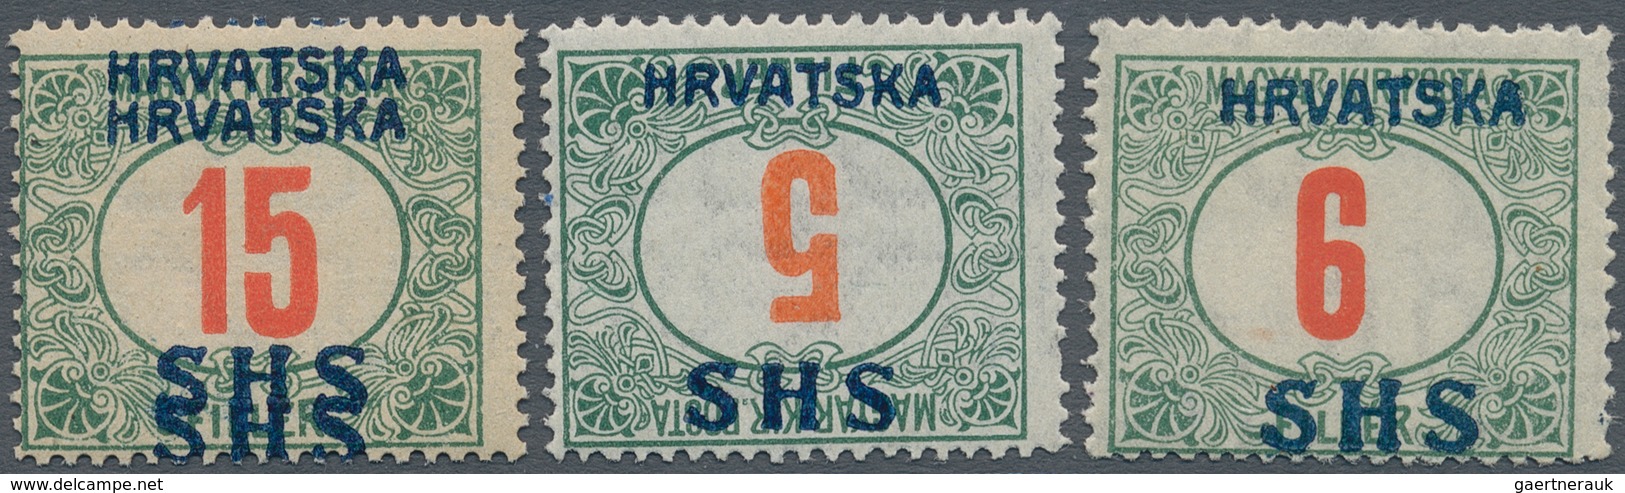 Jugoslawien - Portomarken: 1918, SHS Overprints, Specialised Assortment Of 20 Stamps, Showing Invert - Impuestos